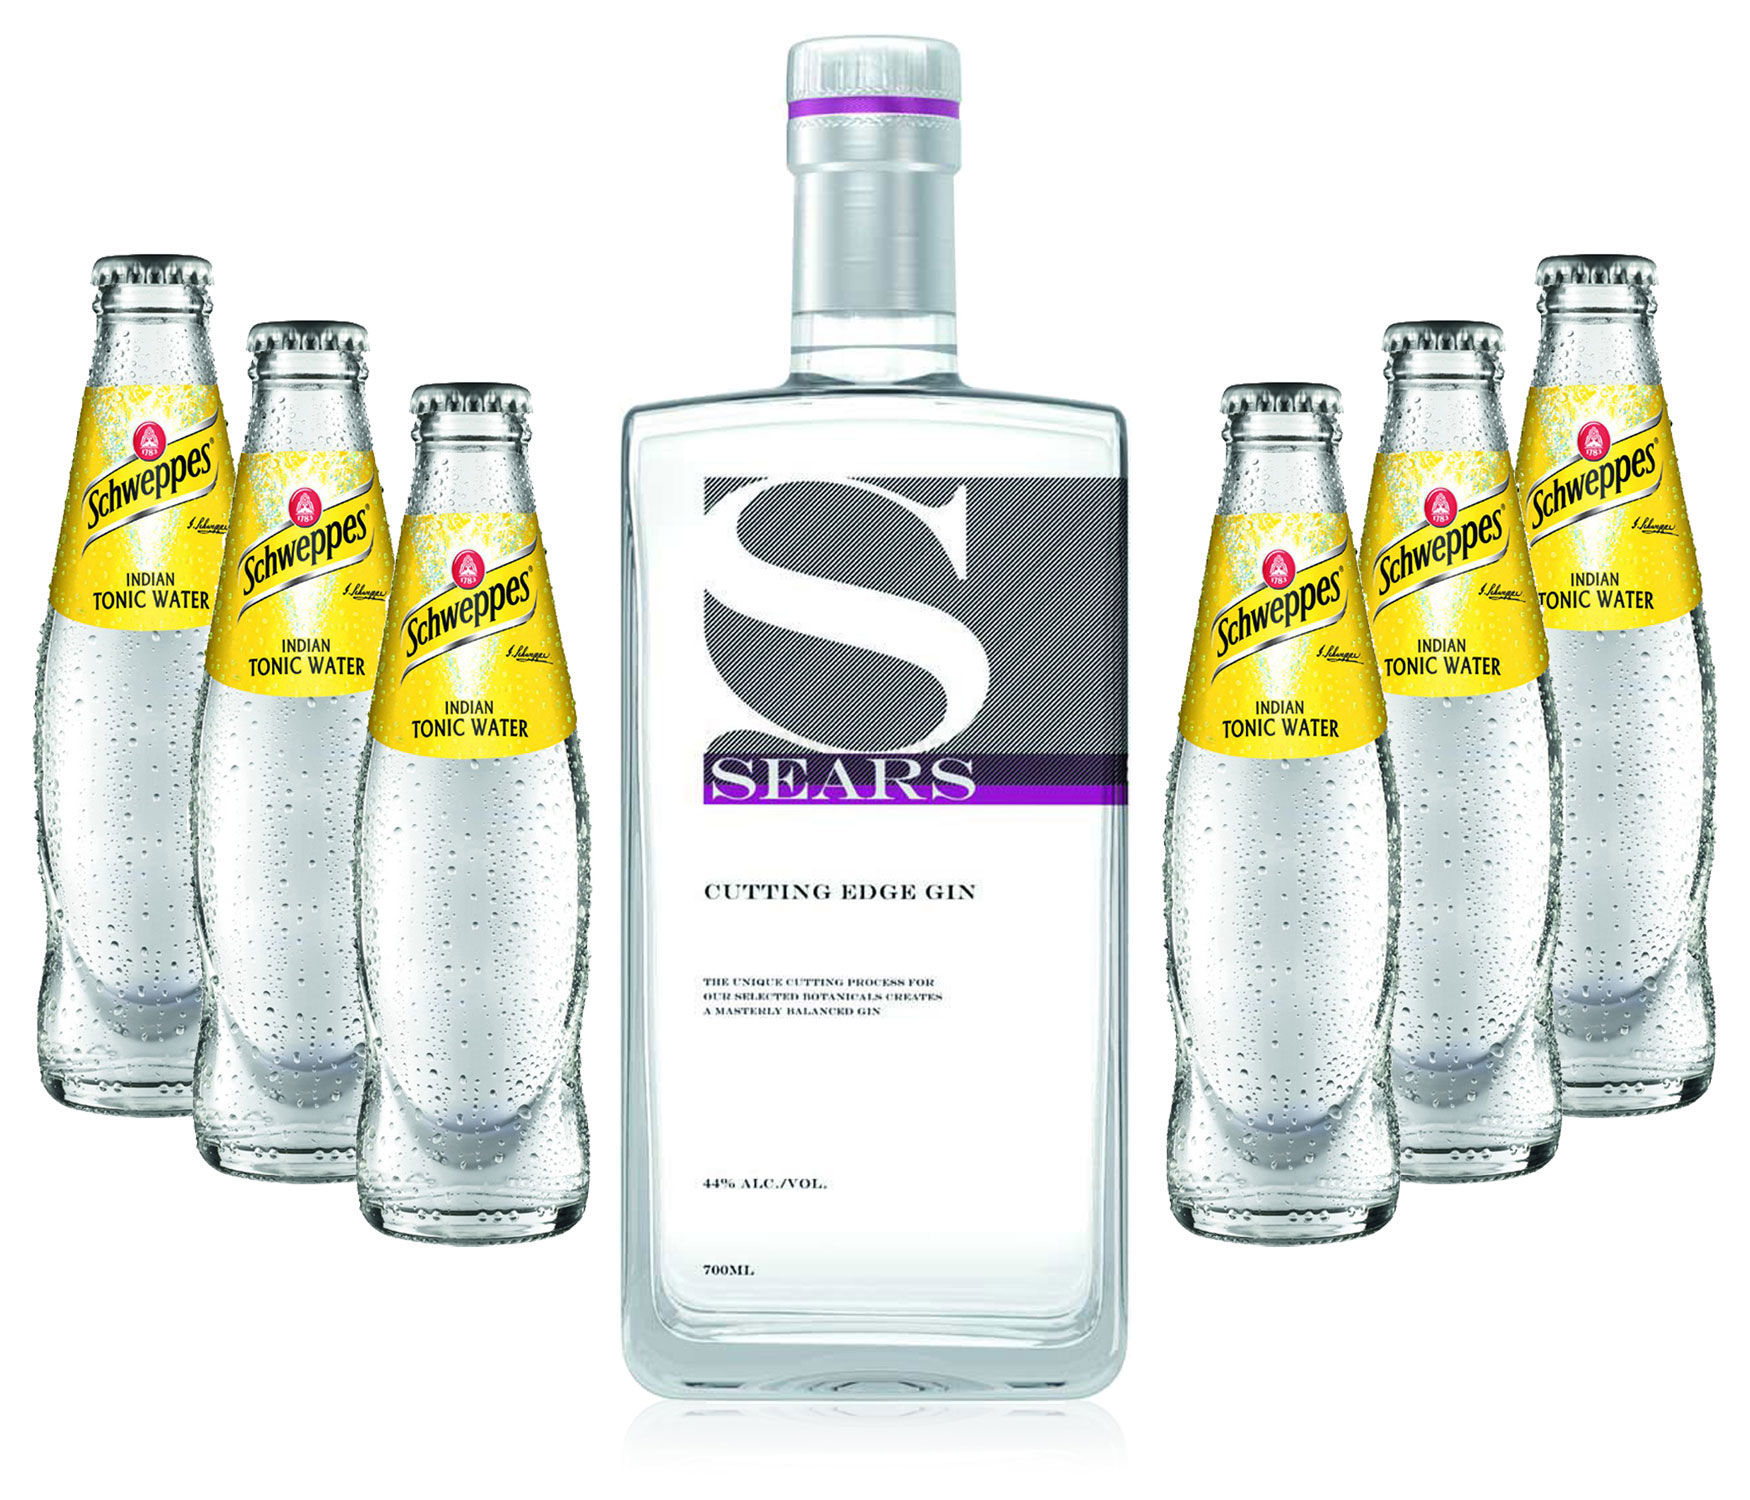 Gin Tonic Set - Sears Cutting Edge Gin 0,7l 700ml (44% Vol) + 6x Schweppes Tonic Water 200ml inkl. Pfand MEHRWEG